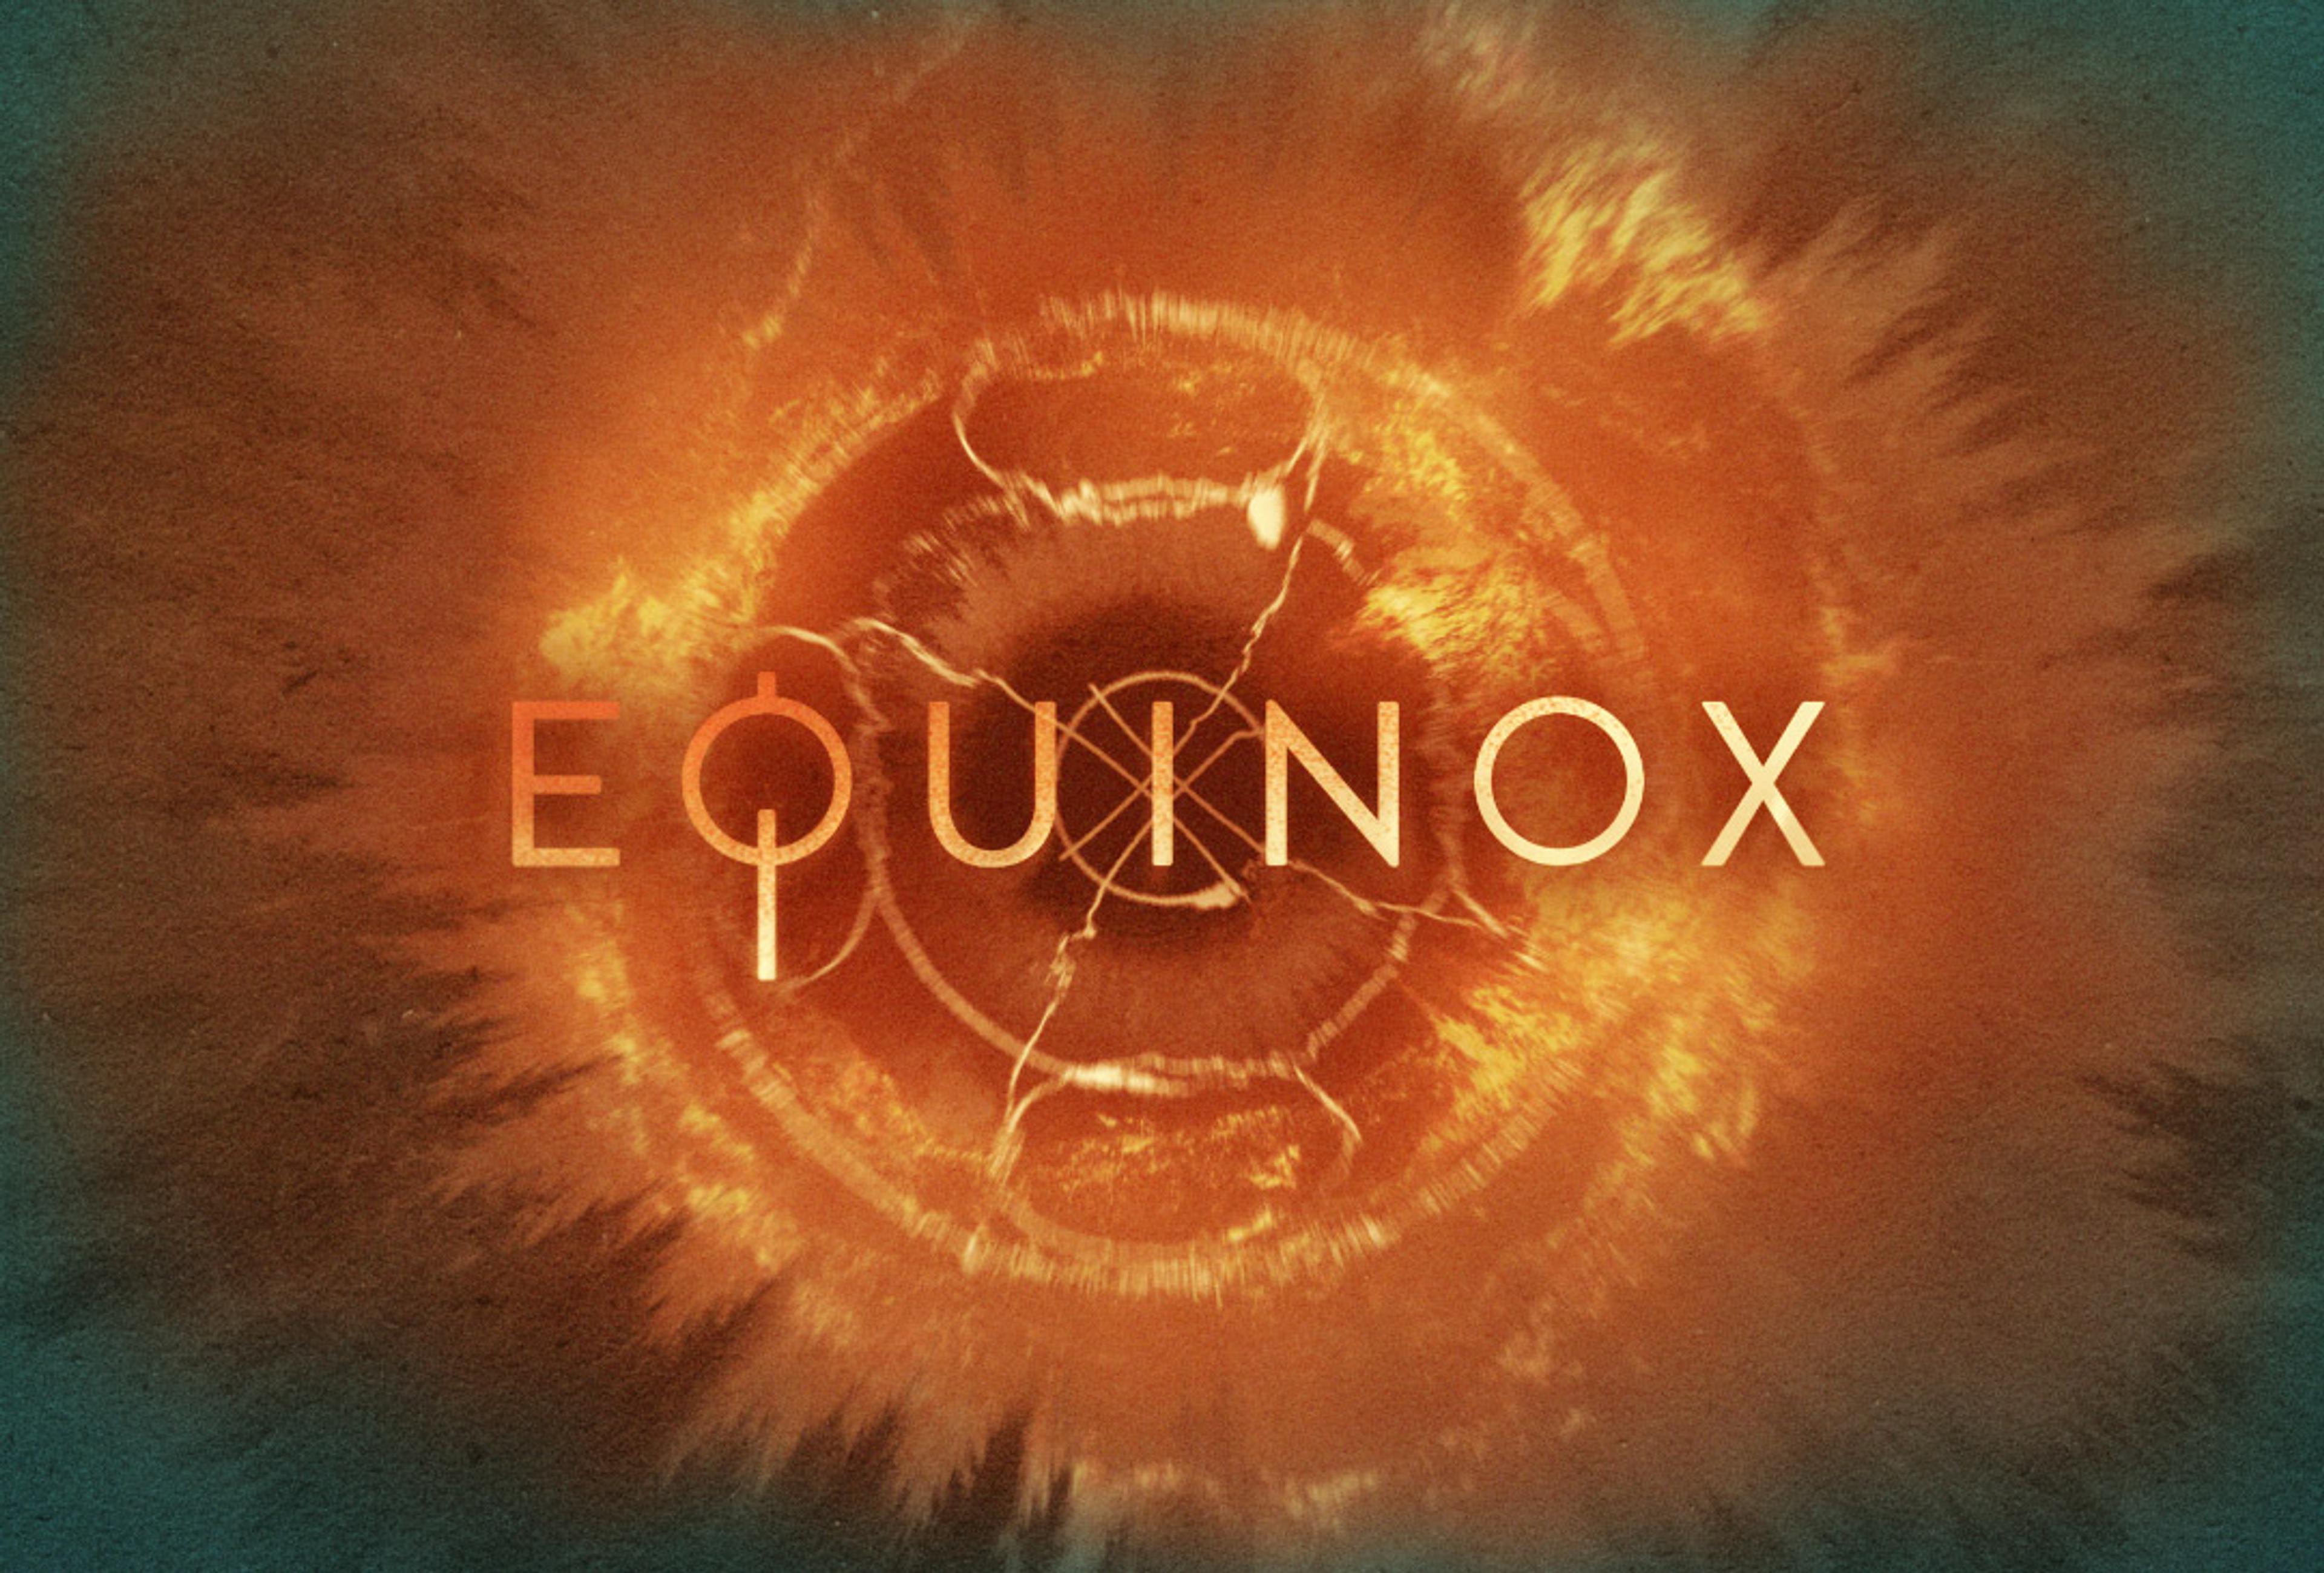 Equinox title logo